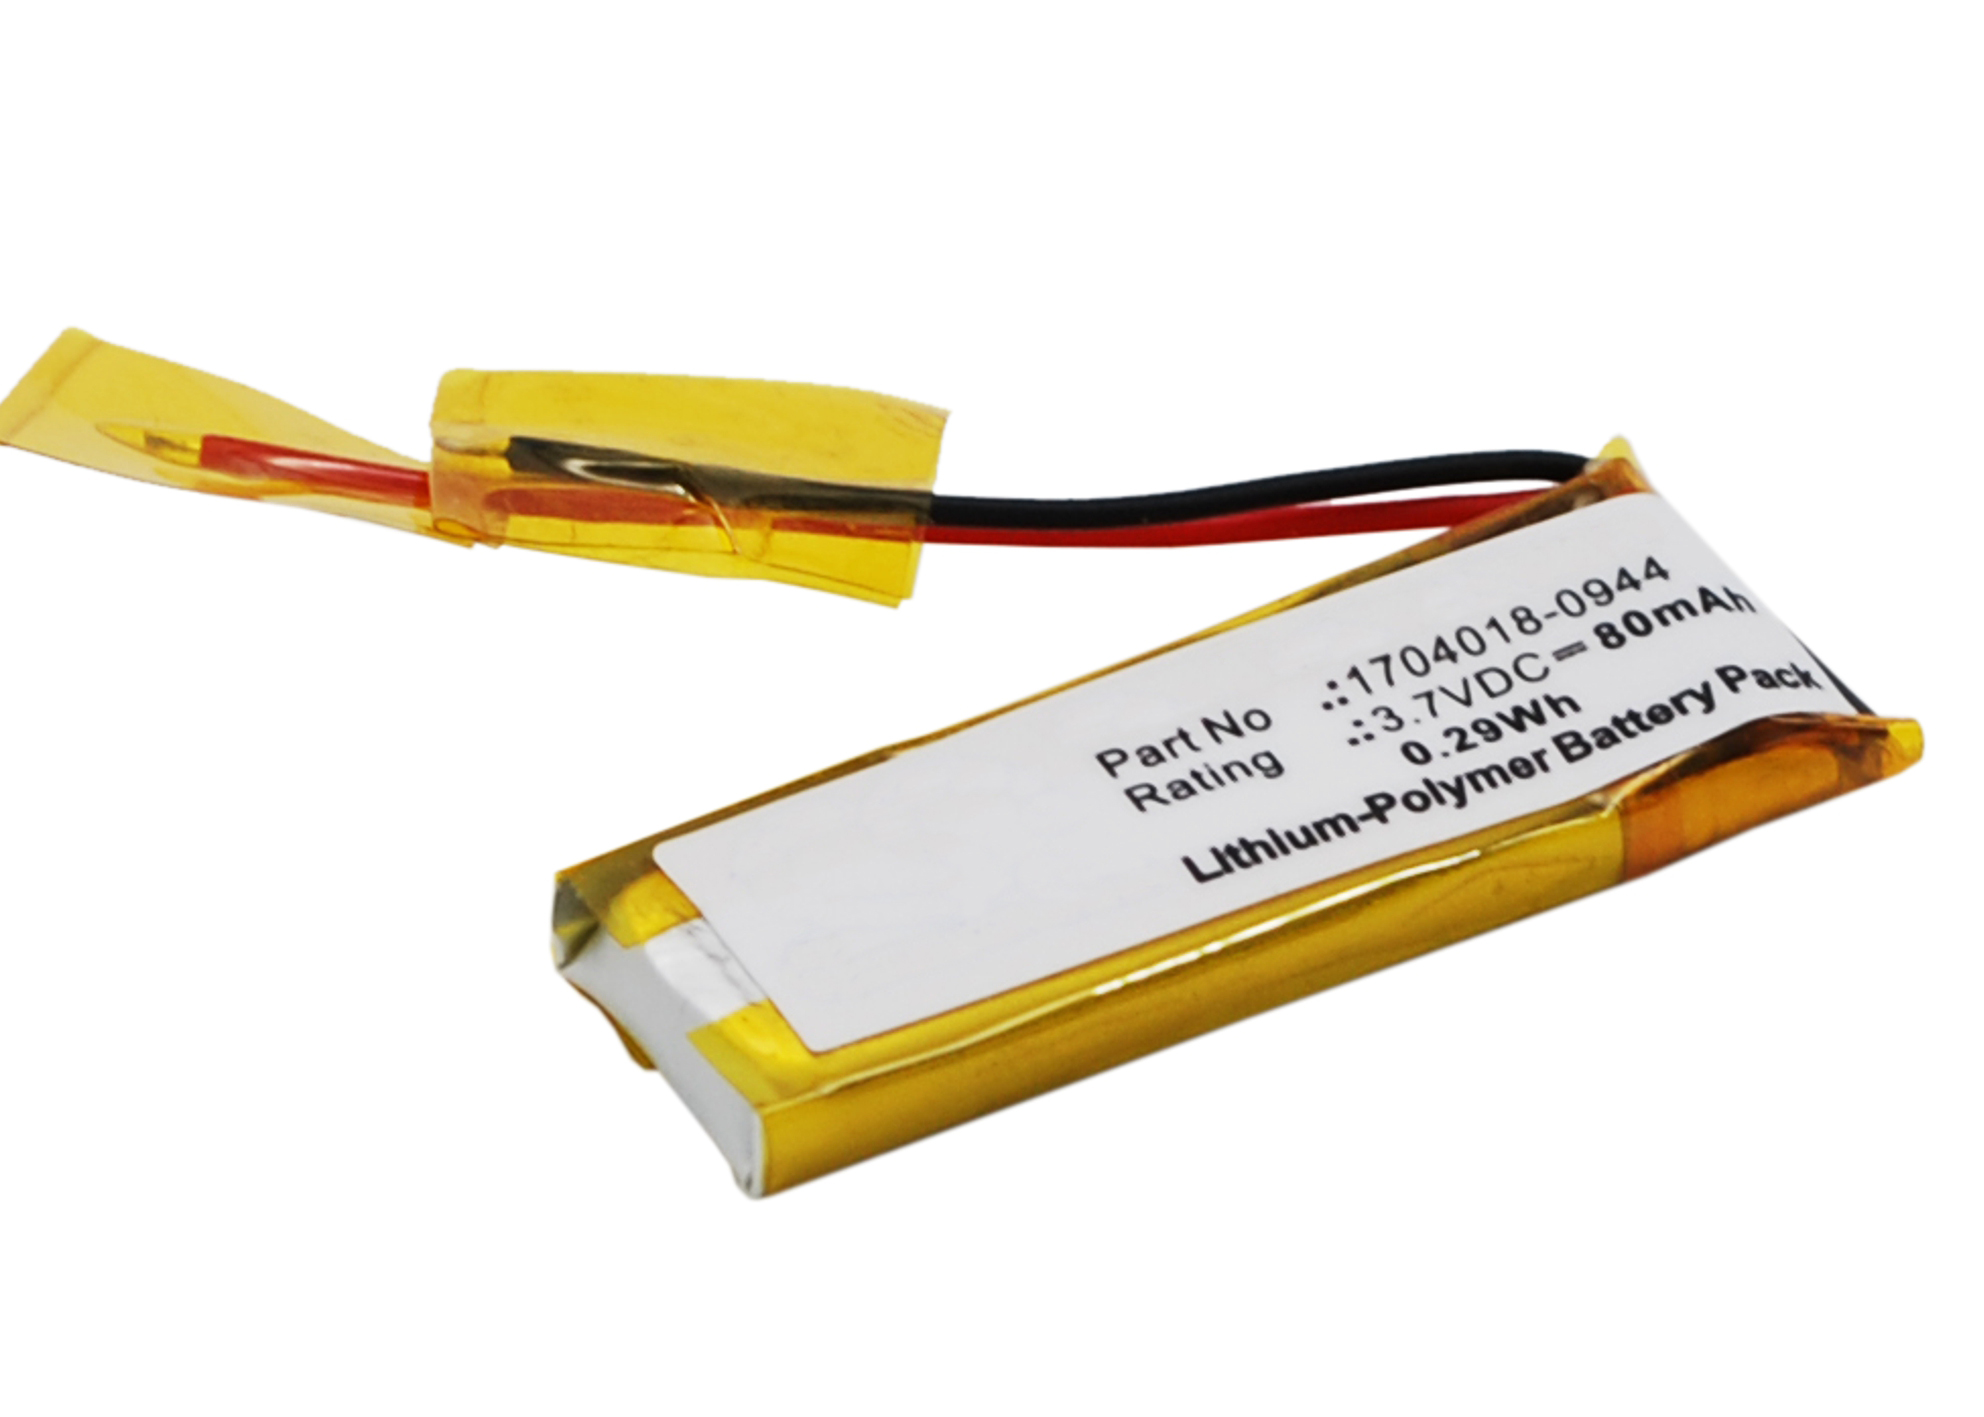 Plantronics 1704018-0944 Battery Replacement - (Li-Pol, 3.7V, 80mAh) Ultra Hi-Capacity Battery